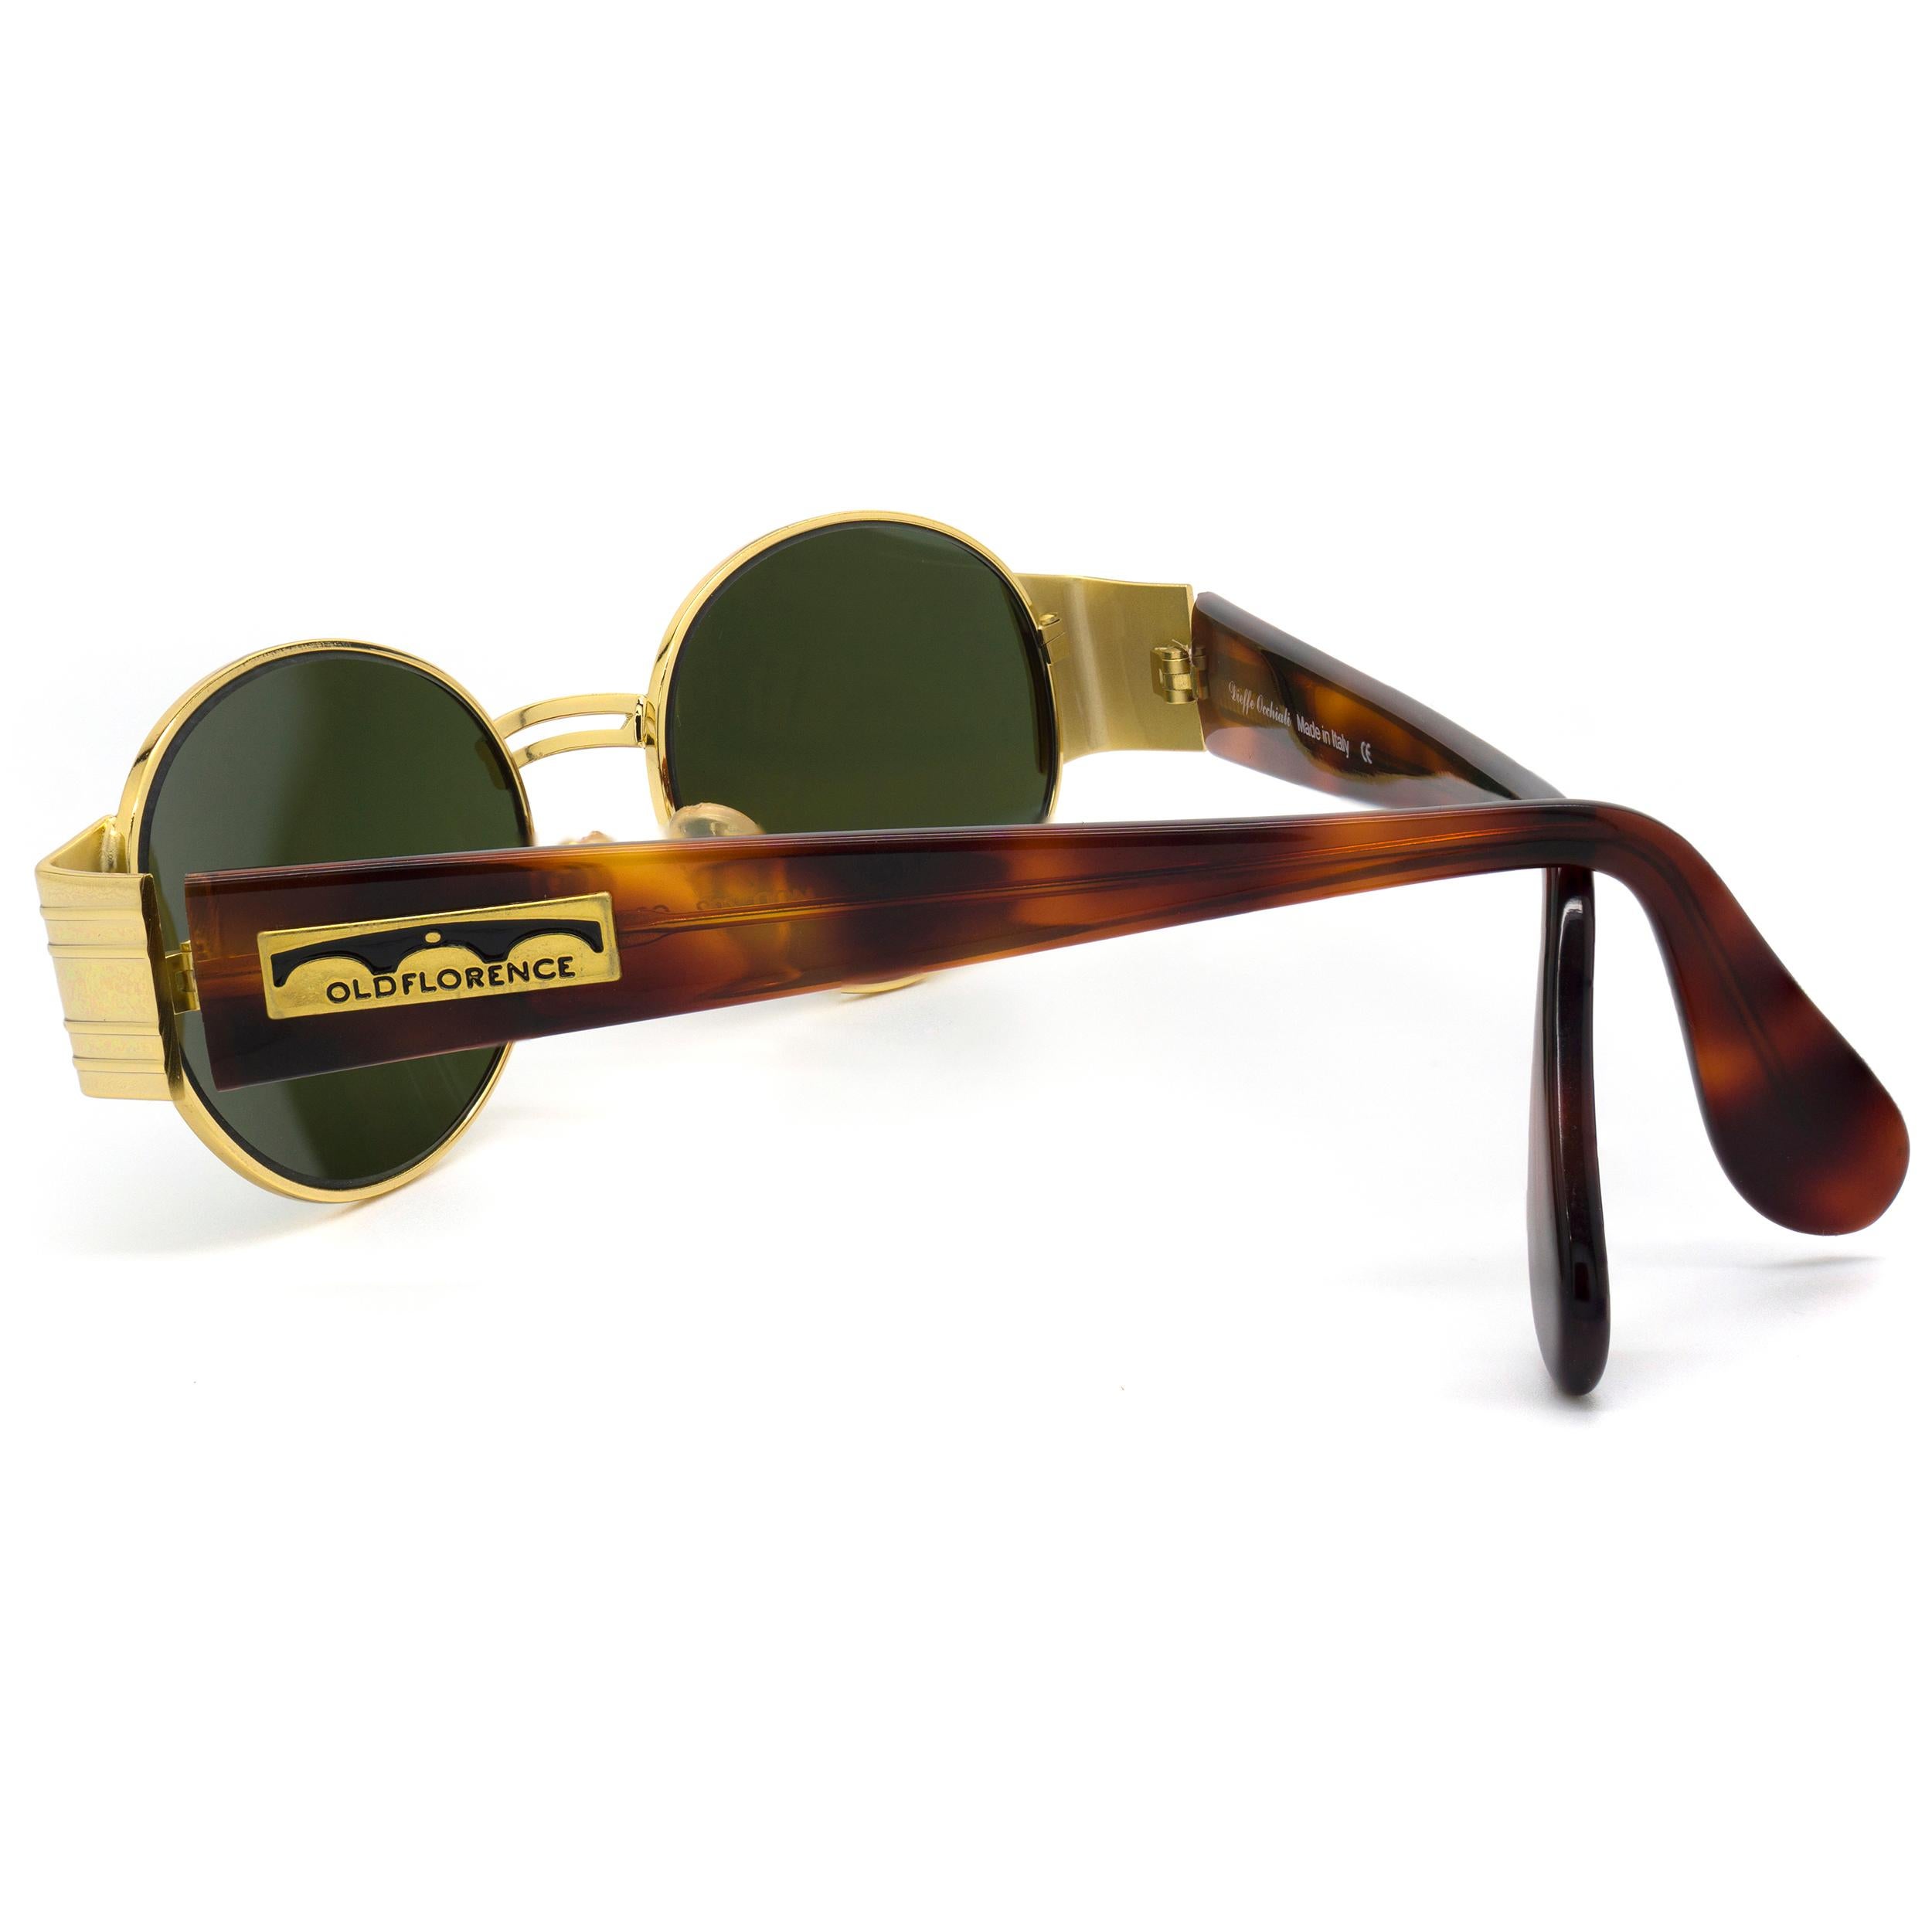 Black Old Florence vintage sunglasses